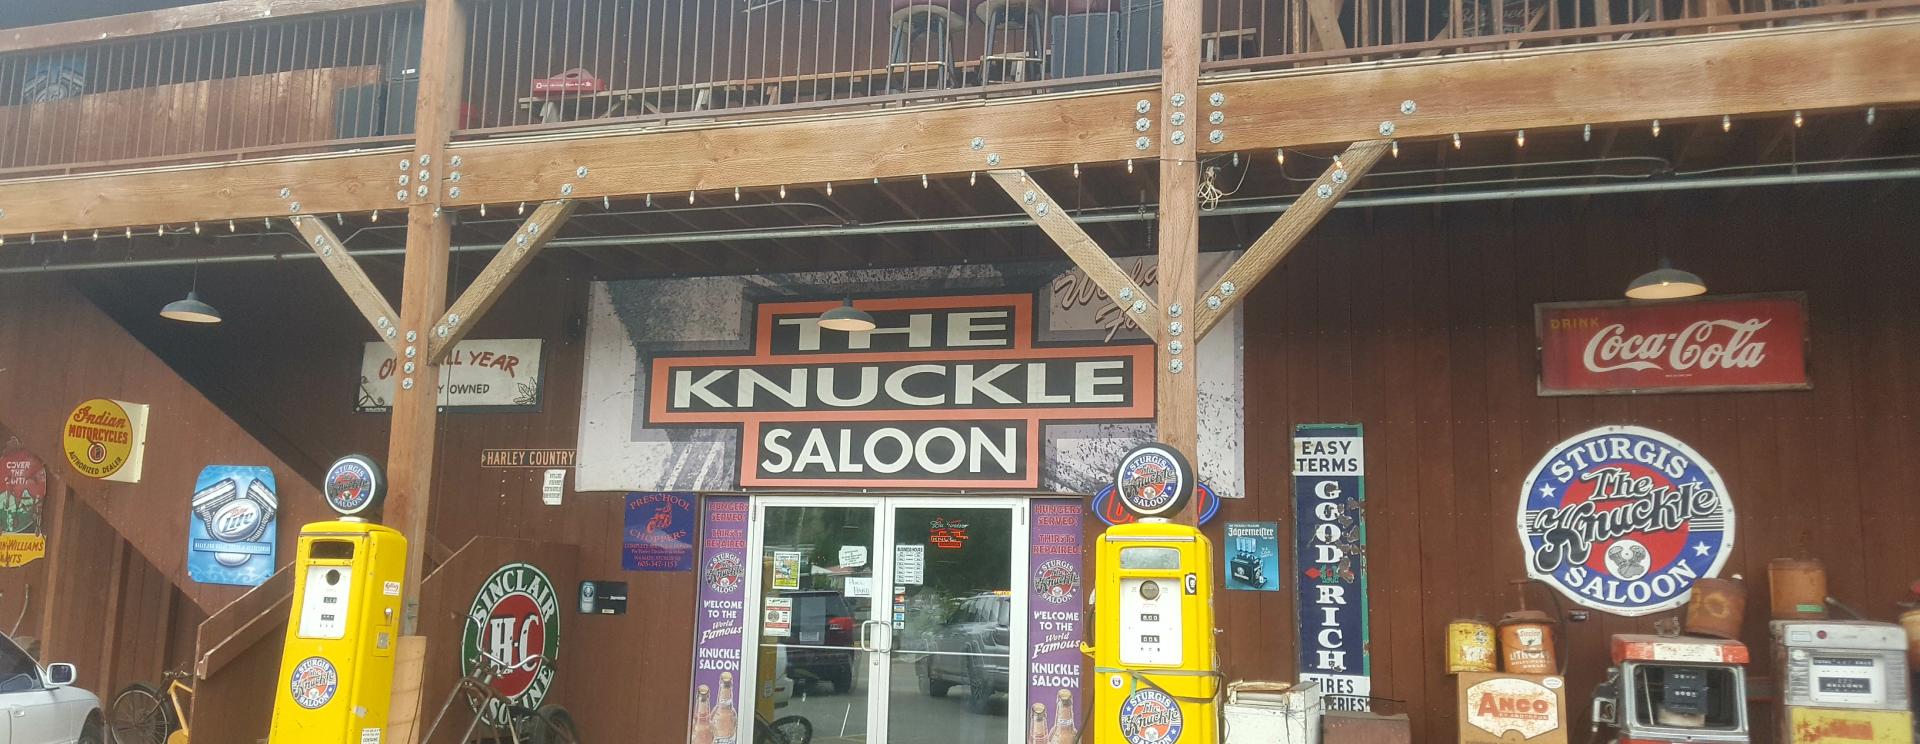 knuckle saloon 2